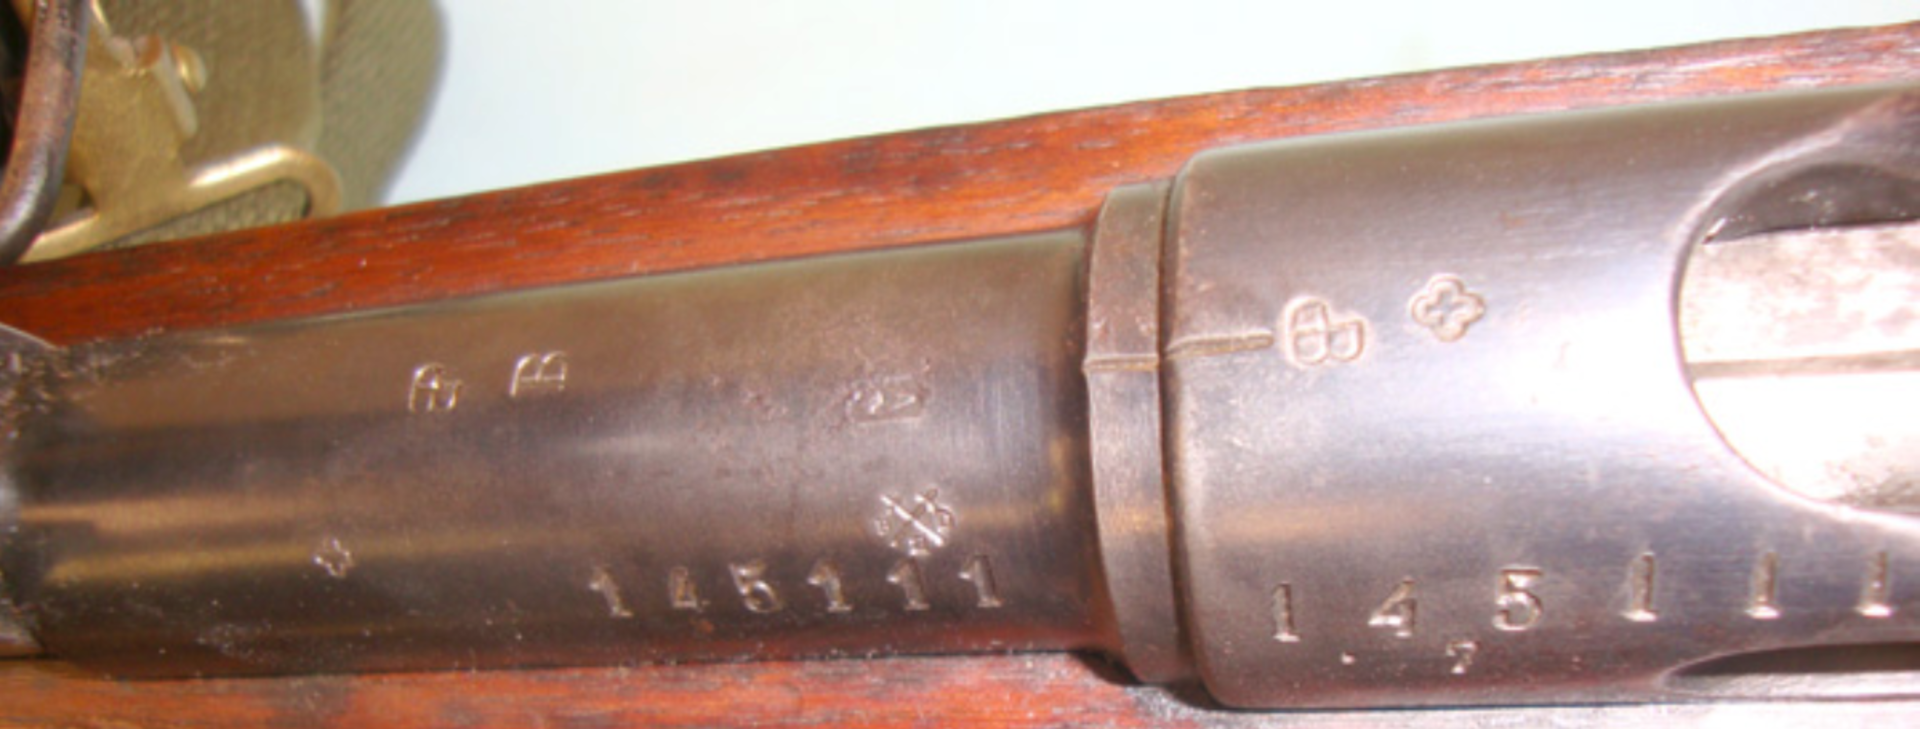 British Nitro Proofed, Swiss, Schmidt-Rubin Model 1889 7.5 x 53.5 mm Straight Pull, Rifle. - Image 3 of 3